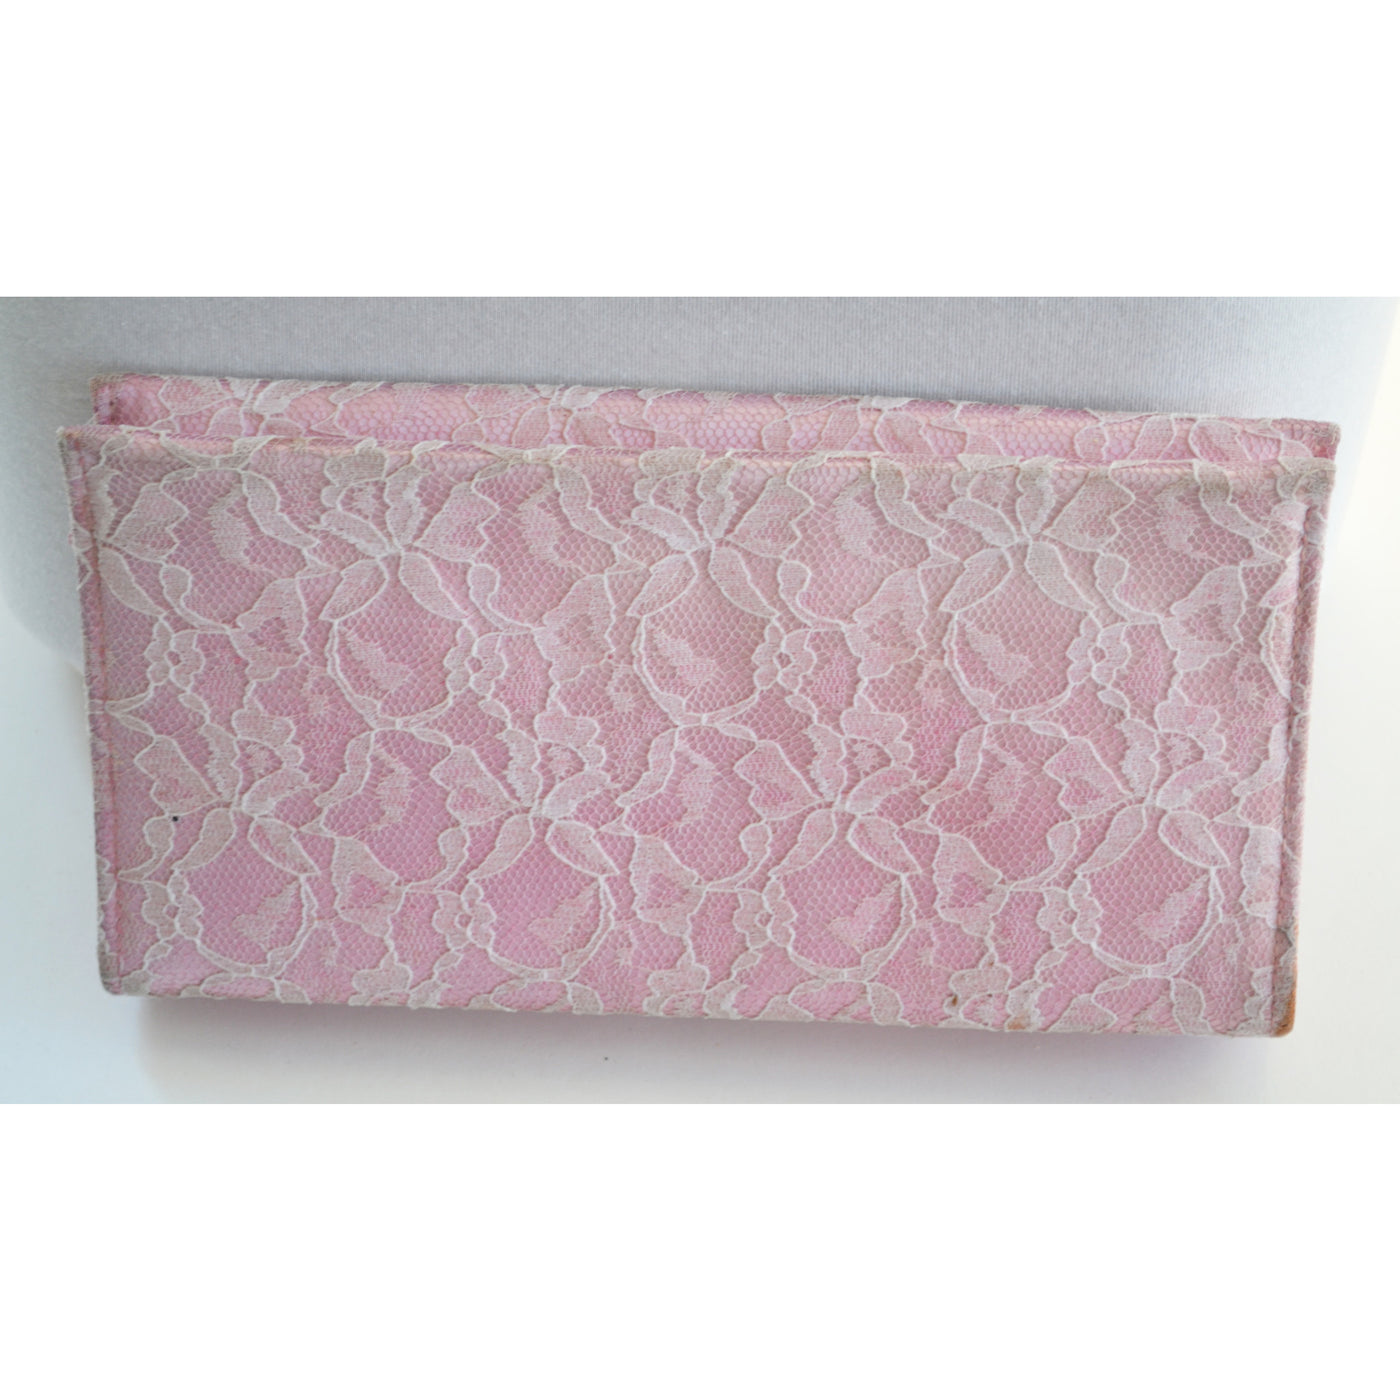 Vintage Pink & Satin Lace Clutch Purse